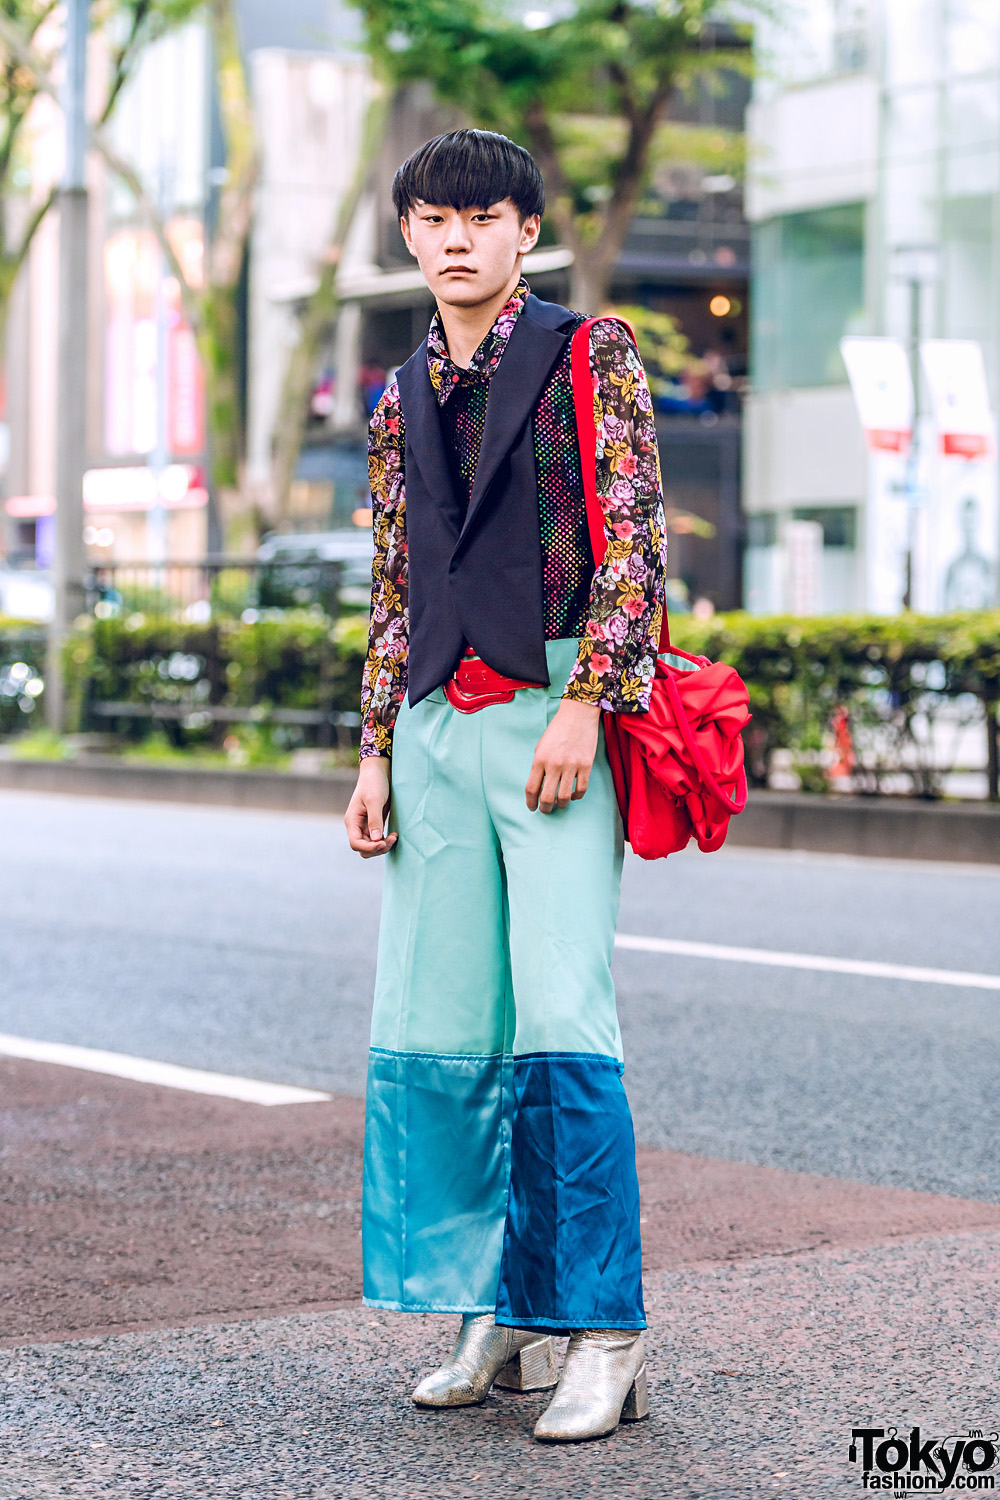 Japanese Eclectic Street Style w/ Floral Print Shirt, Shin Mesh Blazer Top & Ruffle Sling, Colorblock Pants & Maison Margiela Snakeskin Boots